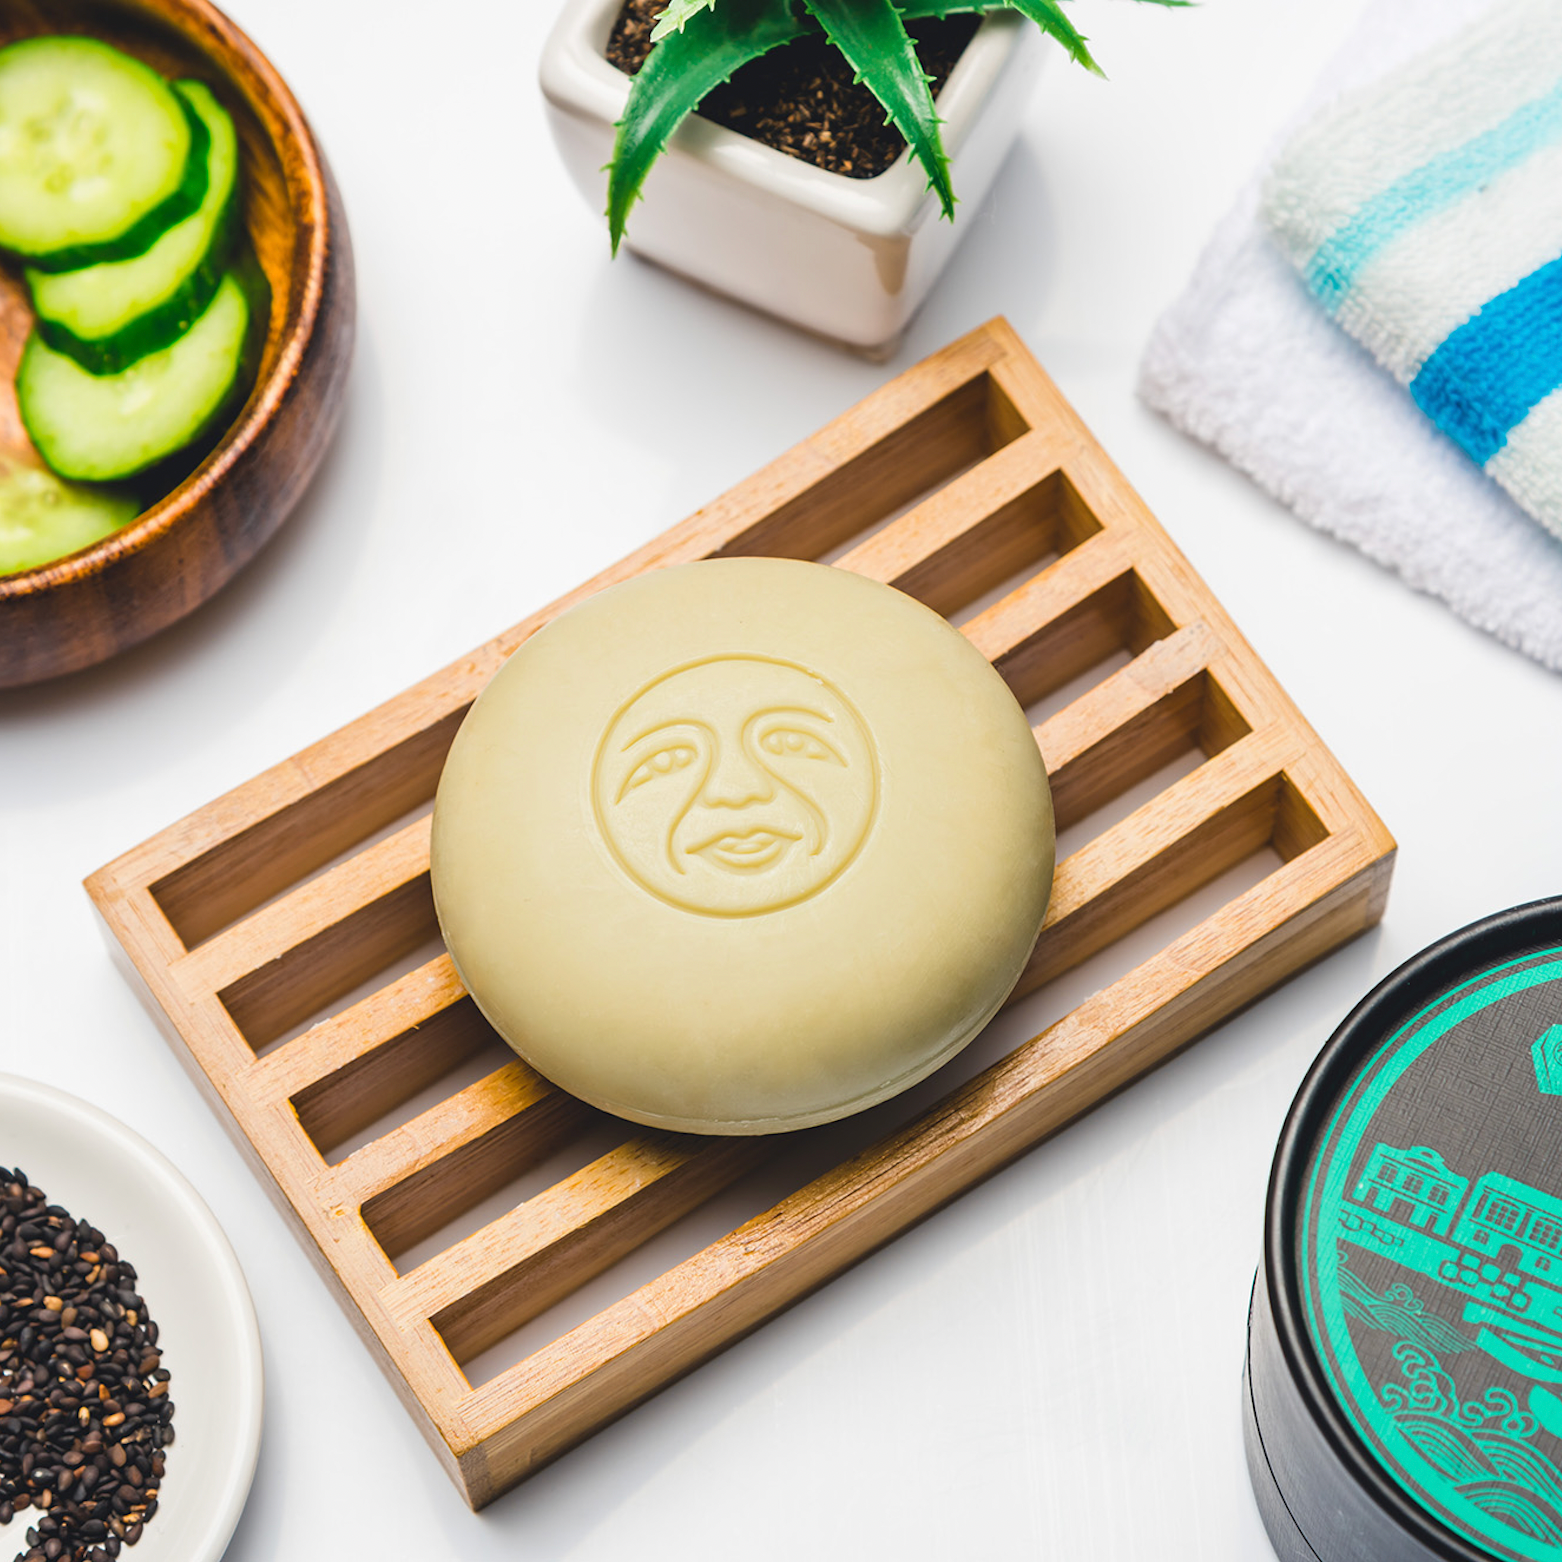 Dachun Soap - Cucumber Facial Soap